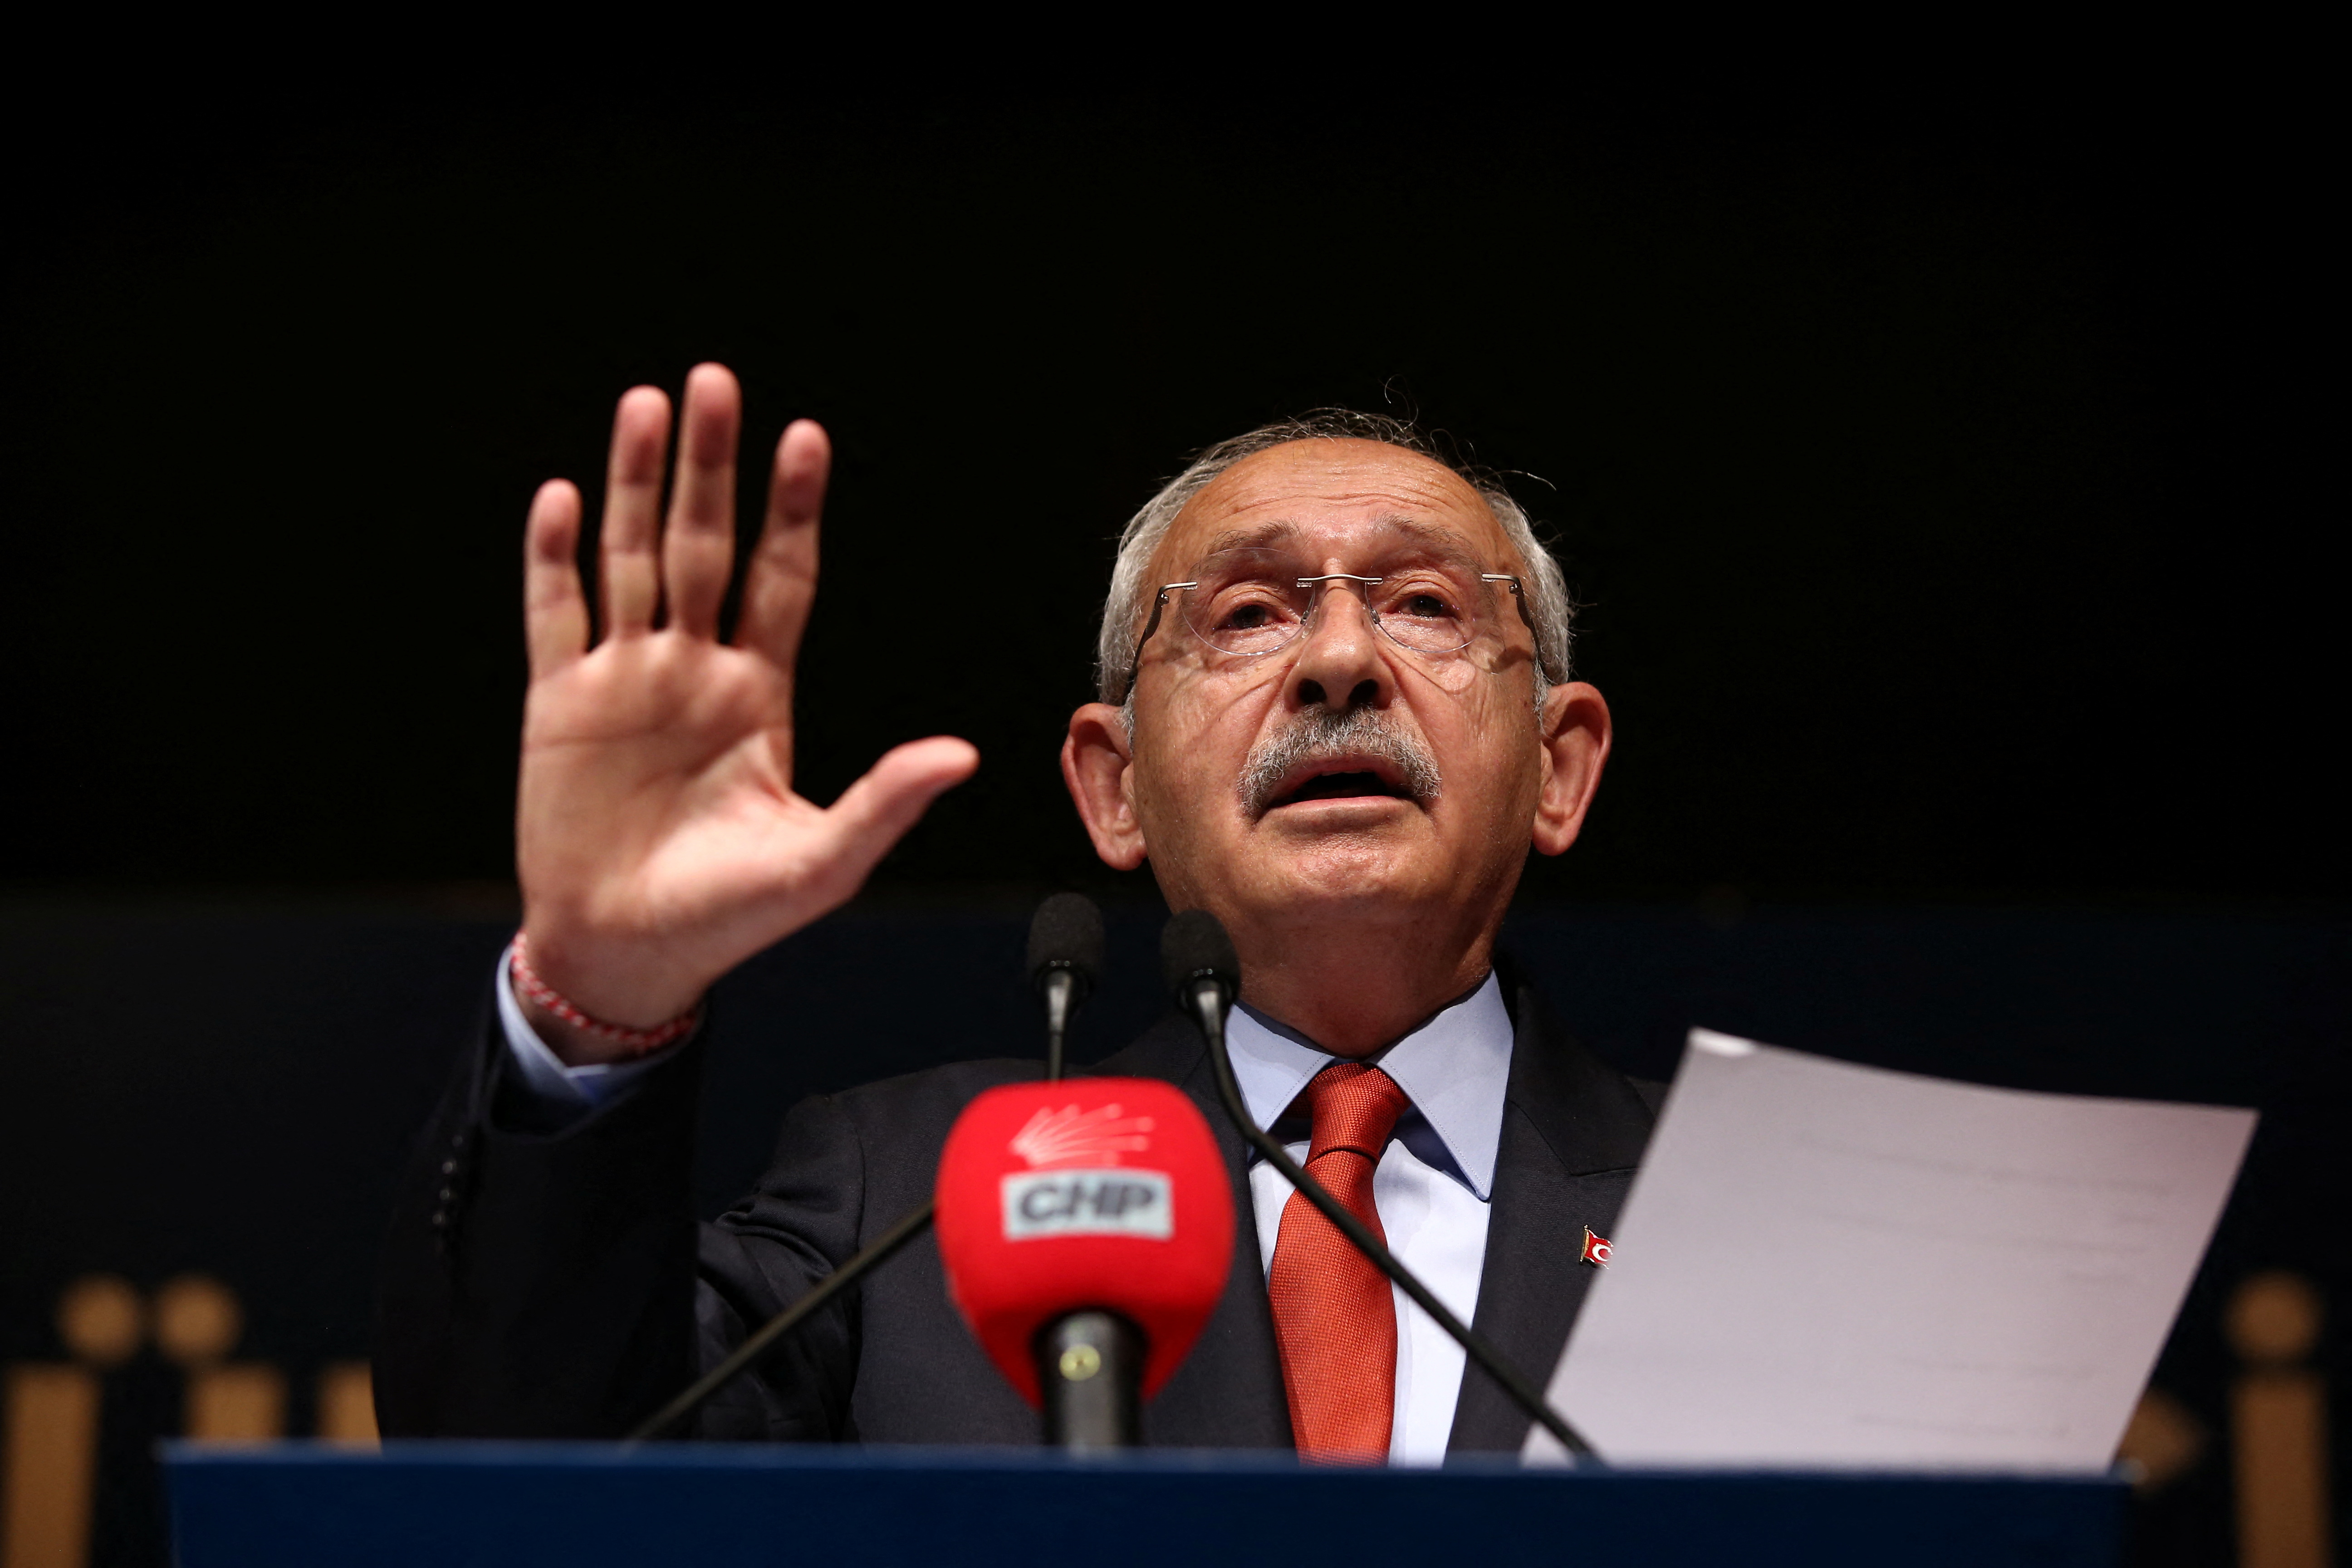 Kemal Kiliçdaroglu, candidat à la présidence de la principale alliance d'opposition turque, prend la parole lors d'une conférence de presse à Ankara